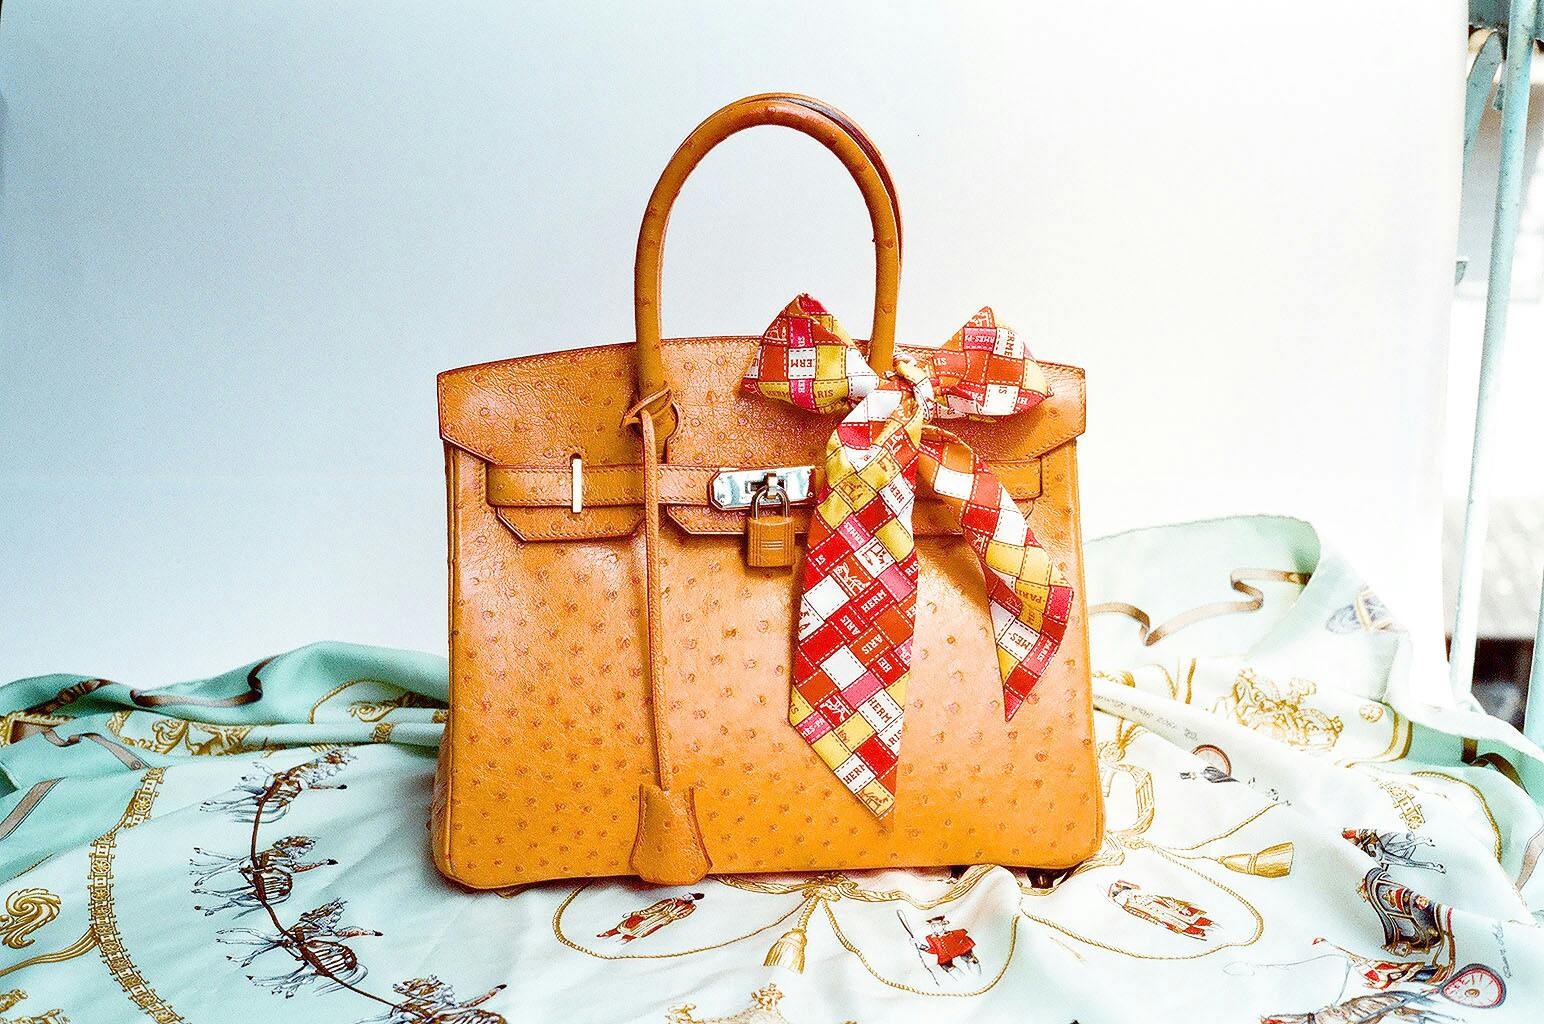 The History of the Iconic Hermès Birkin Bag